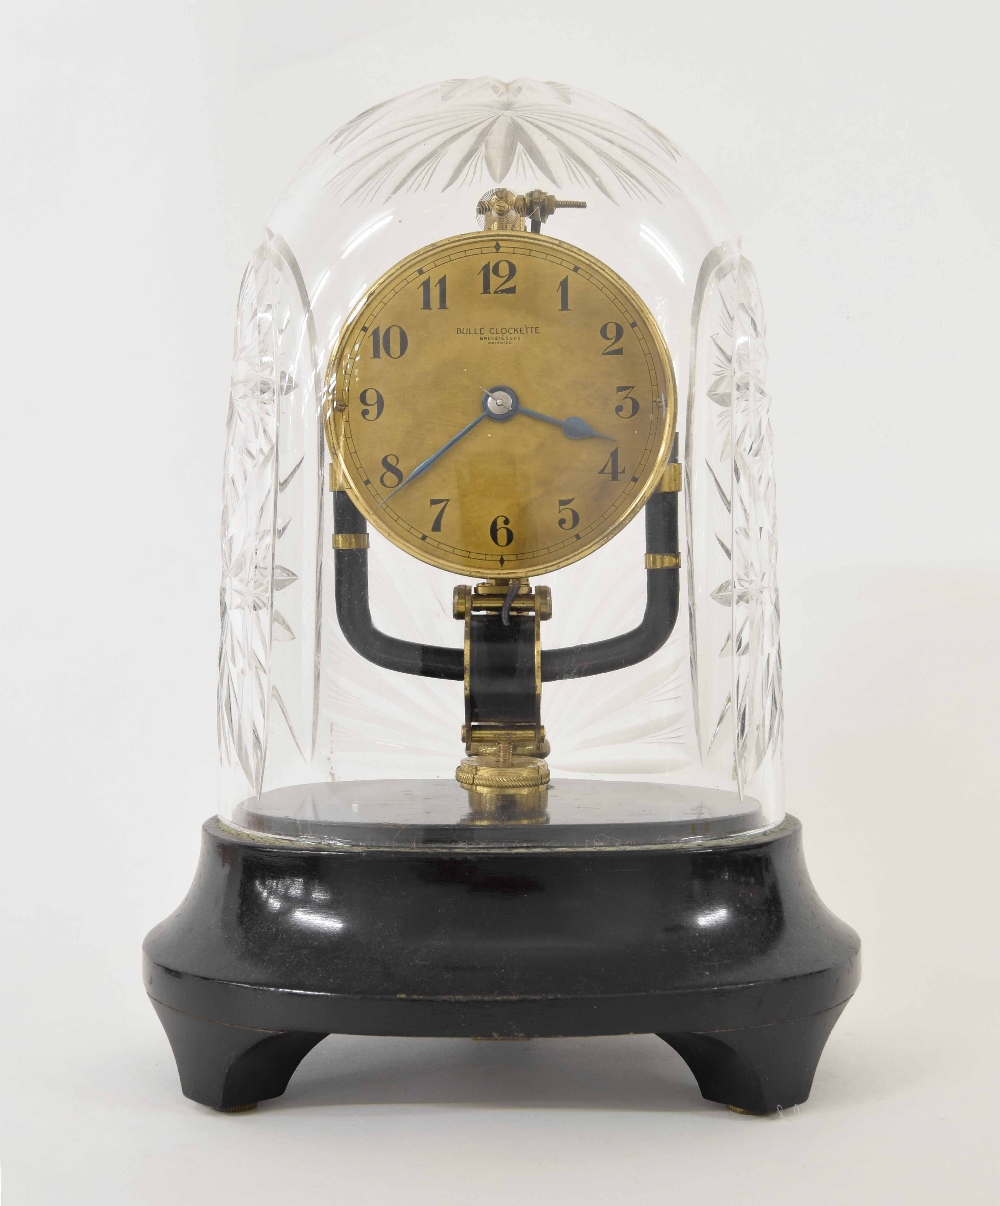 Bulle Clockette electric mantel clock, the 3.5" brass dial signed Bulle Clockette, Brevete S.G.D.